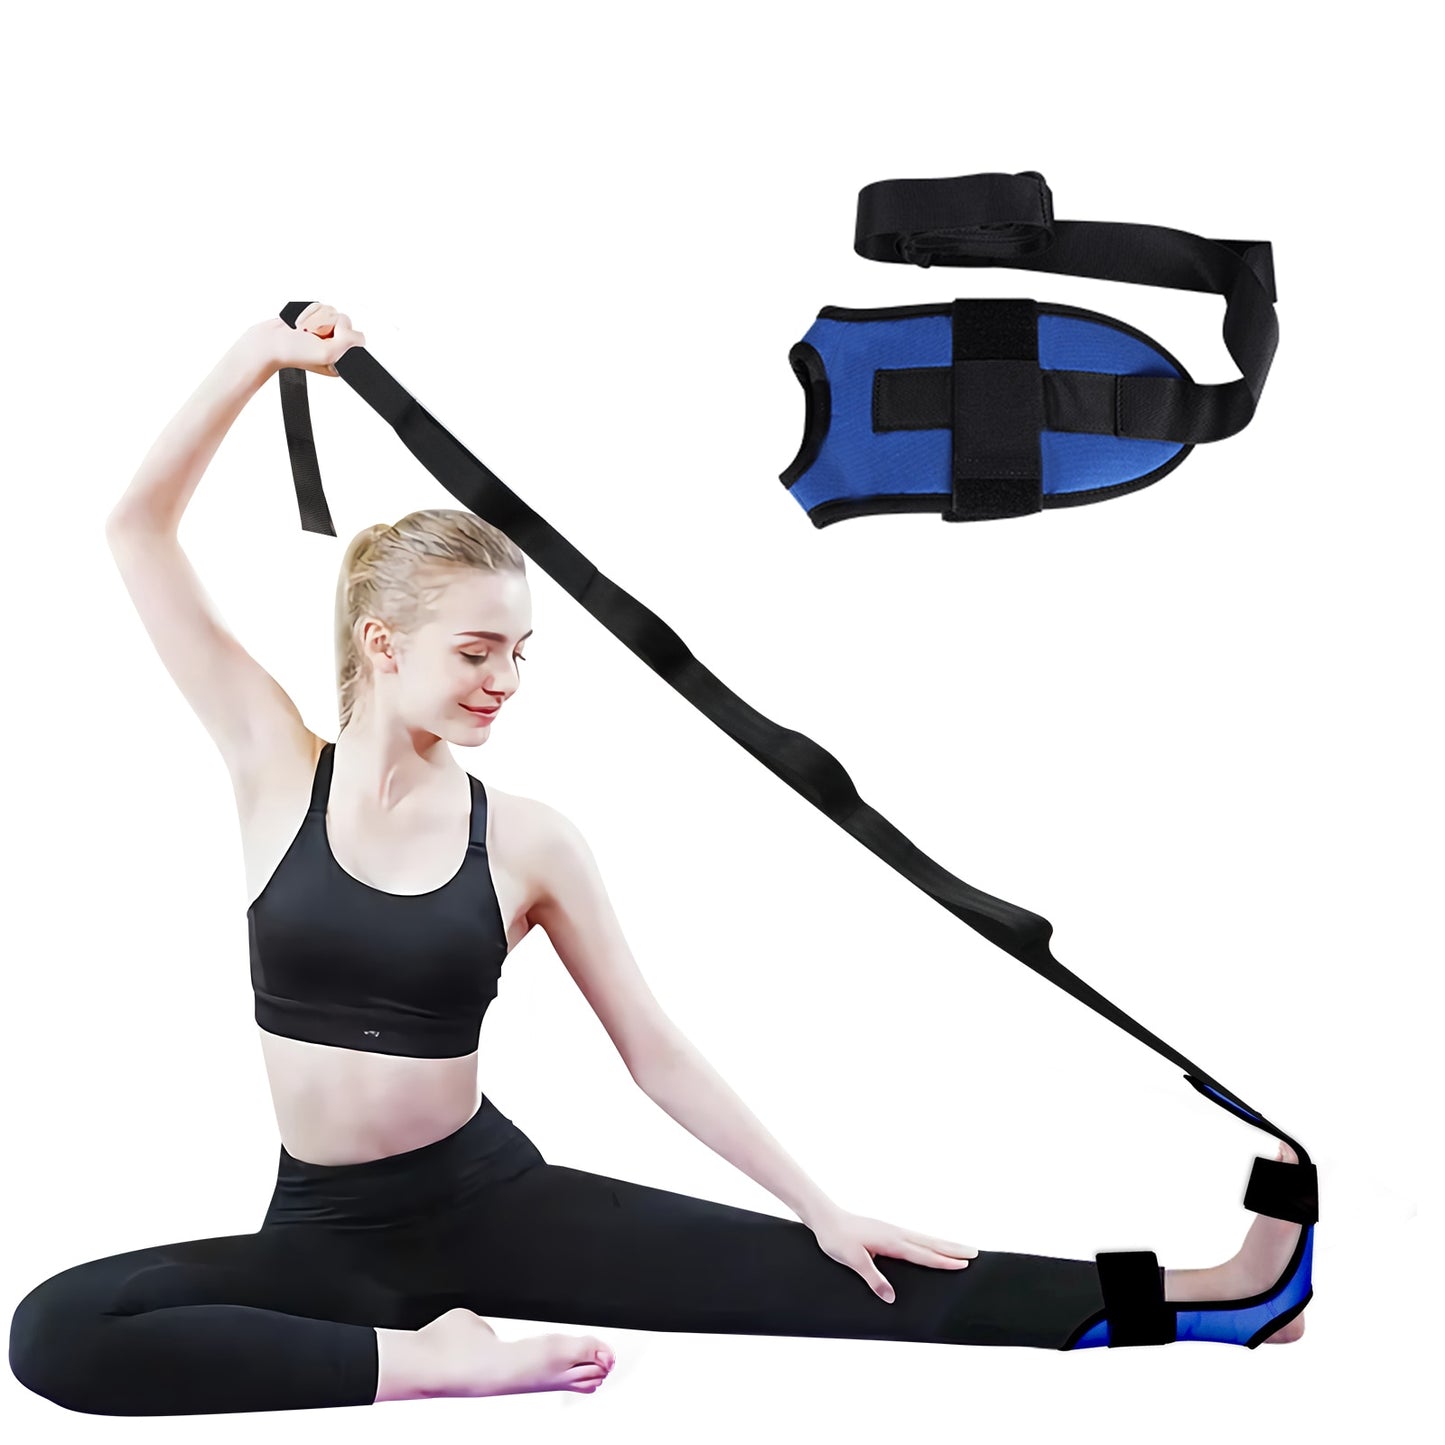 Fascia Stretcher Finally Flexible Again Yoga Strap Belt Trainning And Exercise Stroke Hemiplegia Rehabilitation Leg Stretcher